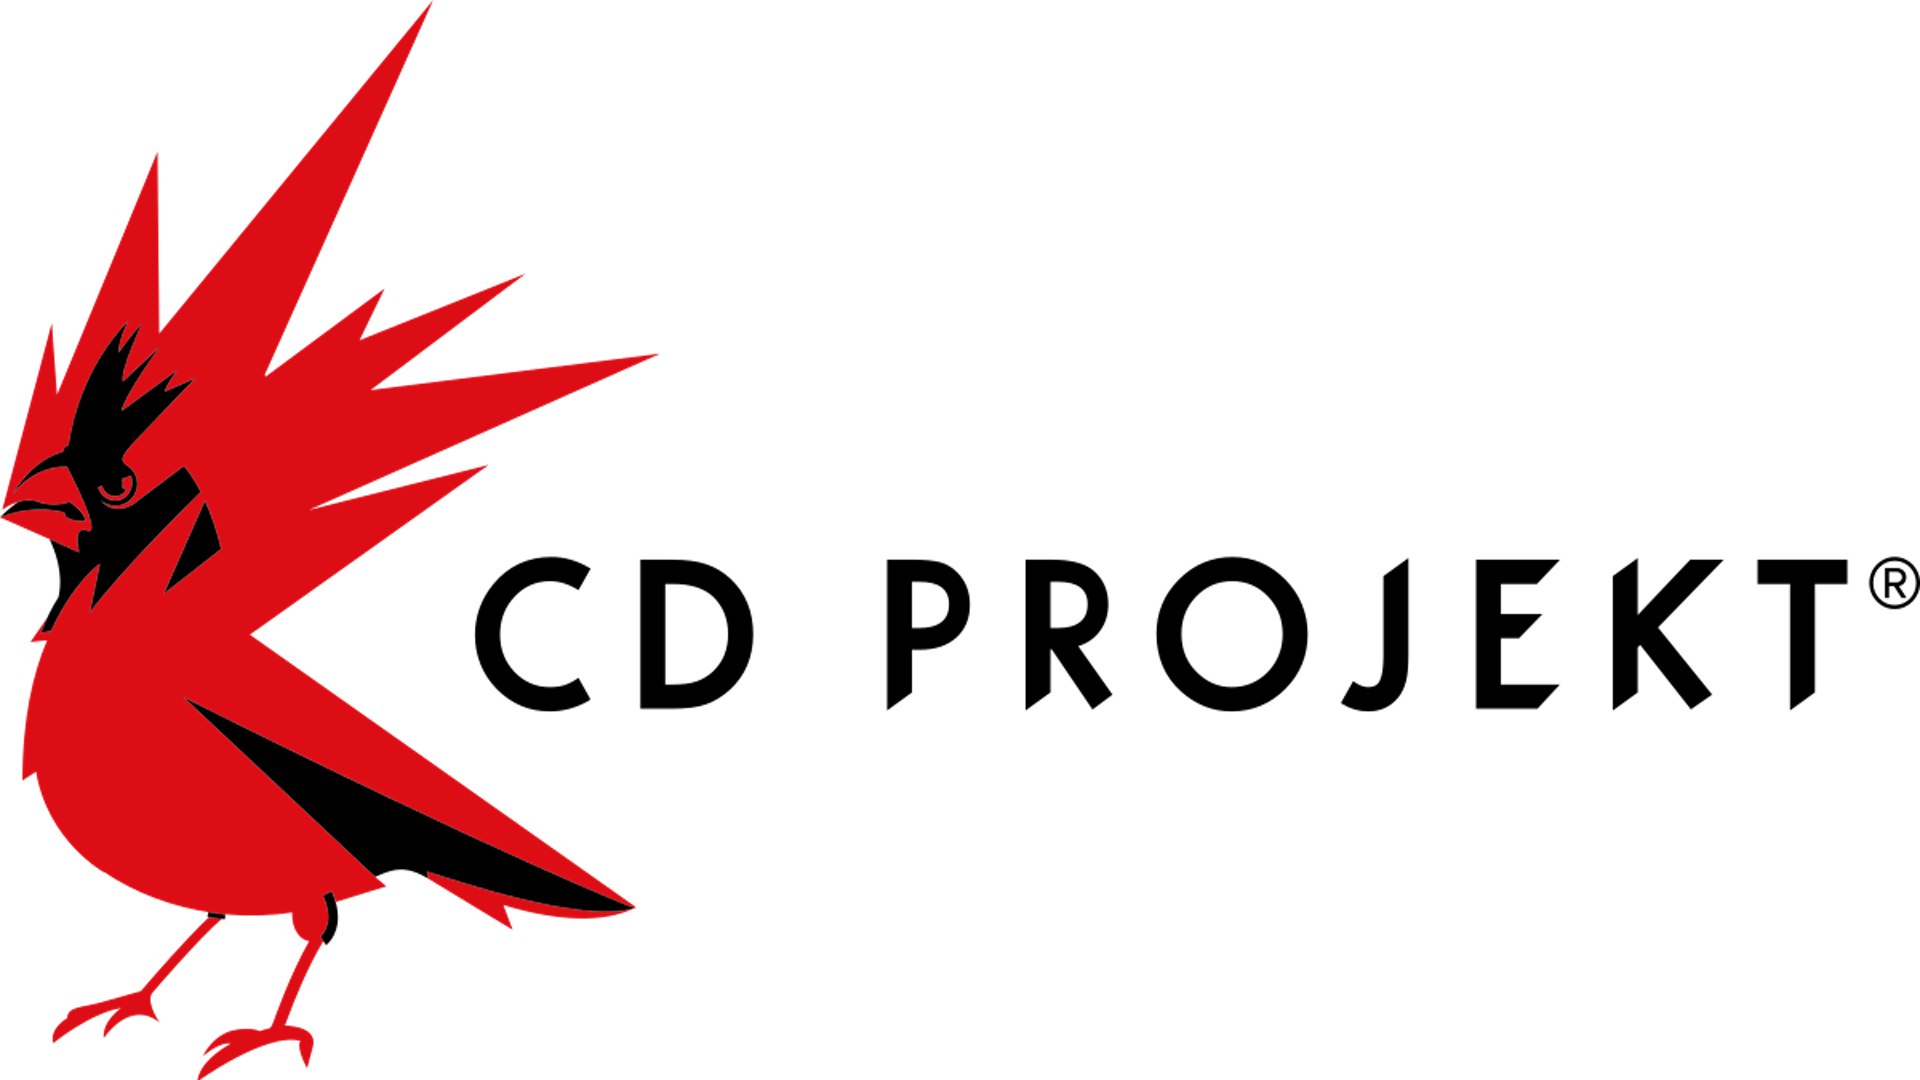 CD Projekt می‌خواهد بازی‌های بزرگ بیشتری را منتشر کند